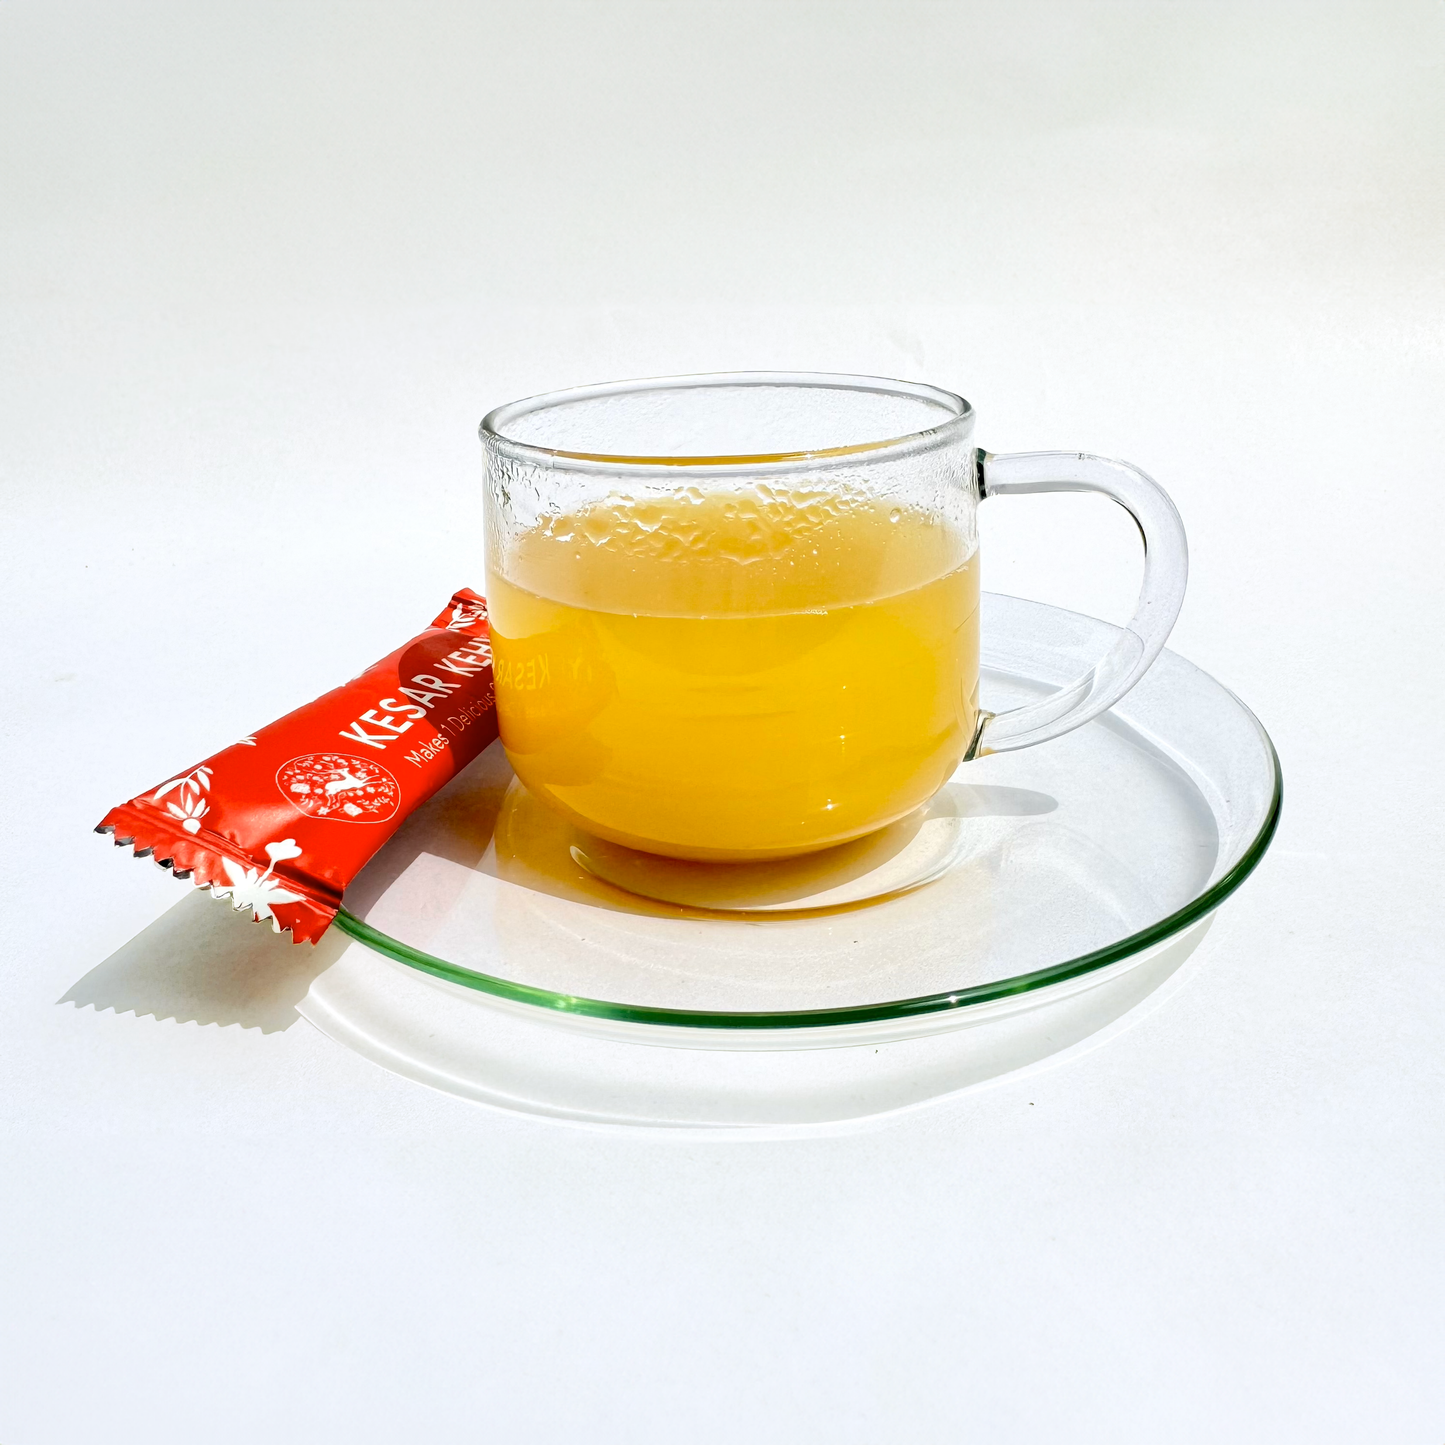 Kesar Kehwah - Pouch Box - 100% organic saffron tea